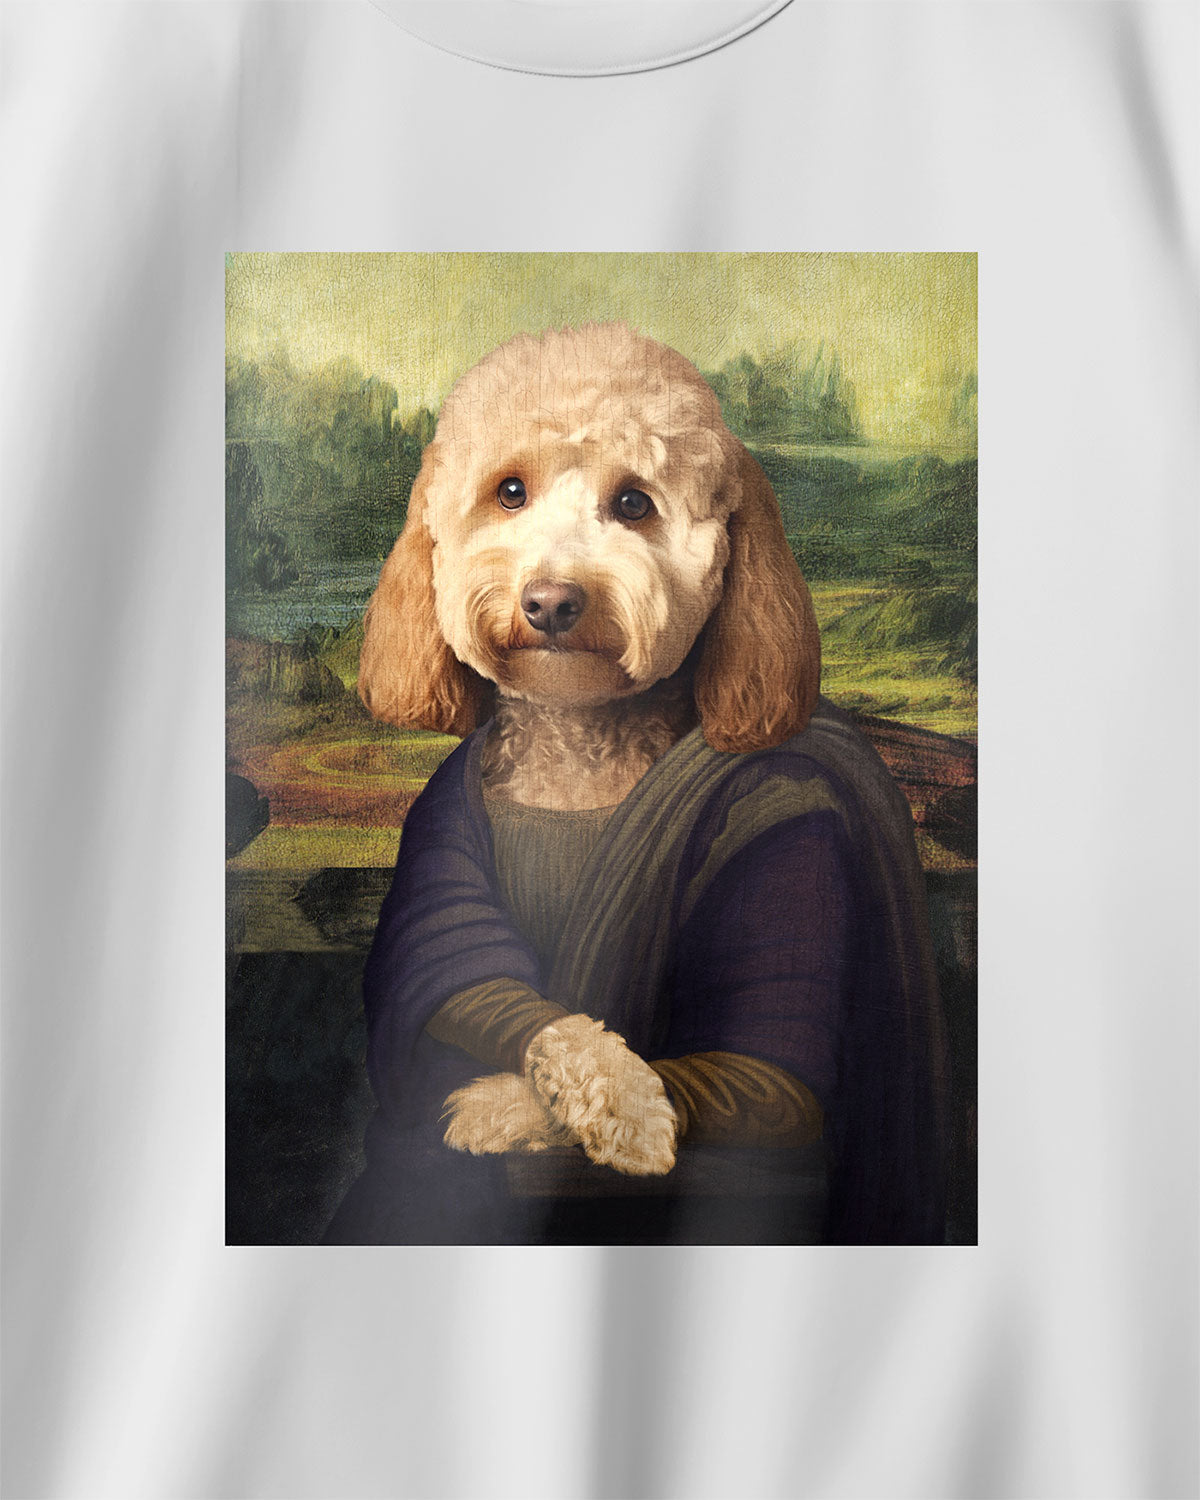 Mona Lisa Labradoodle T-Shirt